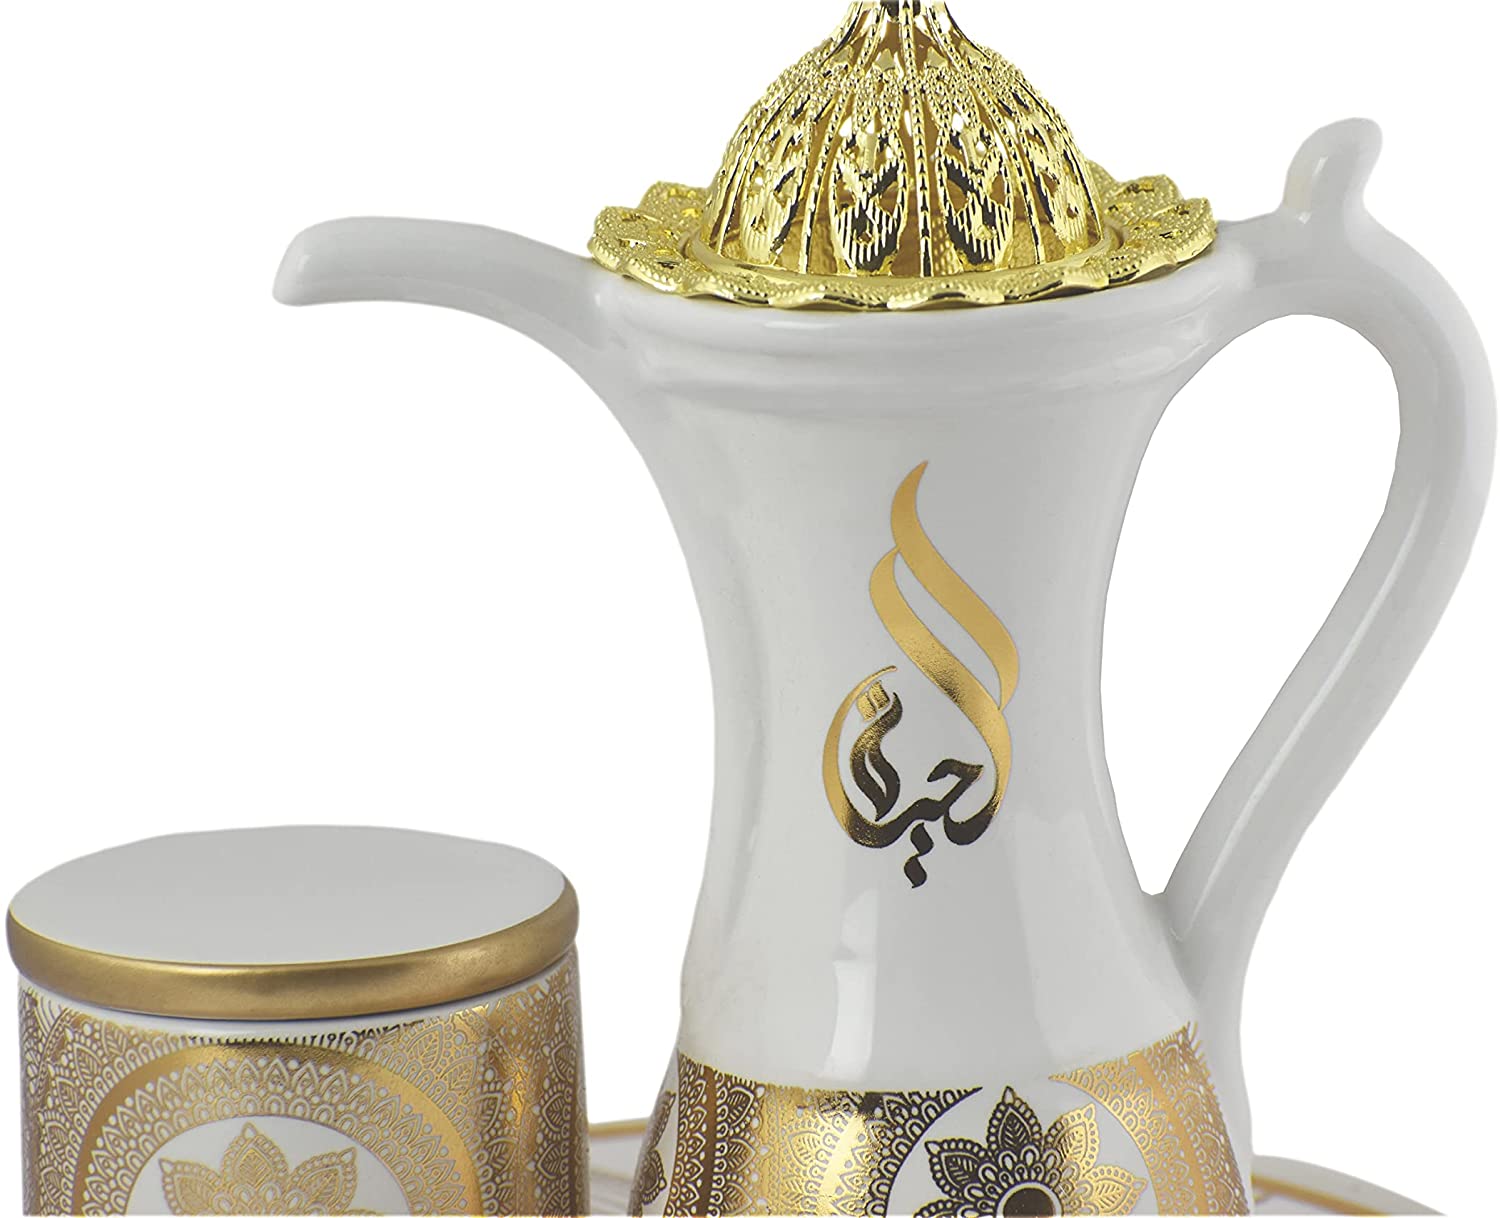 Glossy Arabic Design Royal Bakhoor Tea Set w/ Circular Tray - White | Intense Oud - Intense Oud